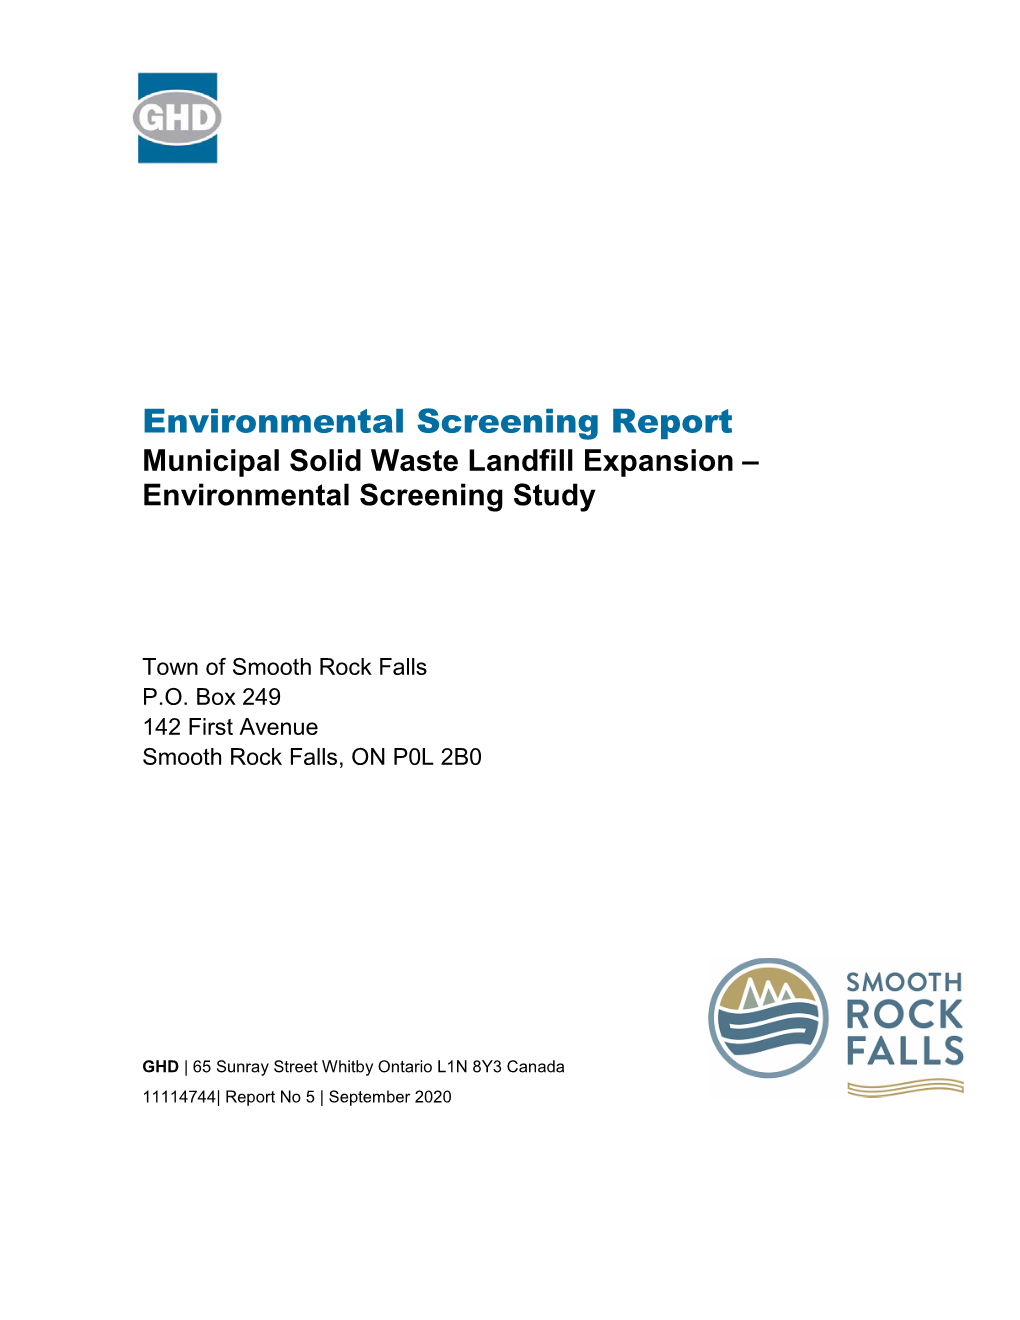 Environmental Screening Report Municipal Solid Waste Landfill Expansion – Environmental Screening Study